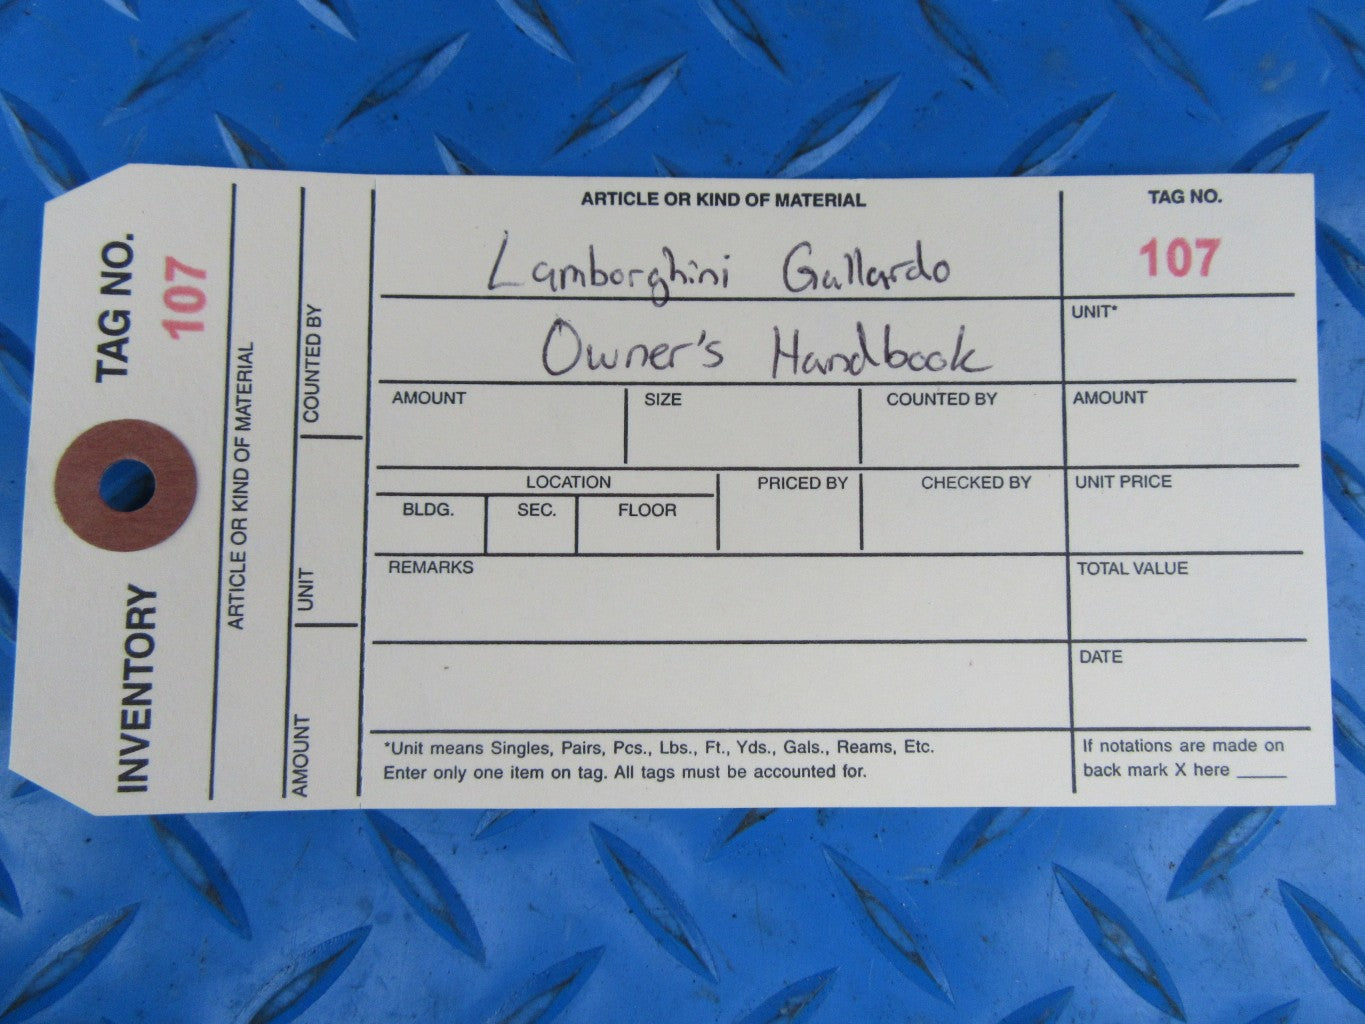 Lamborghini Gallardo Spyder owner's handbook #0107